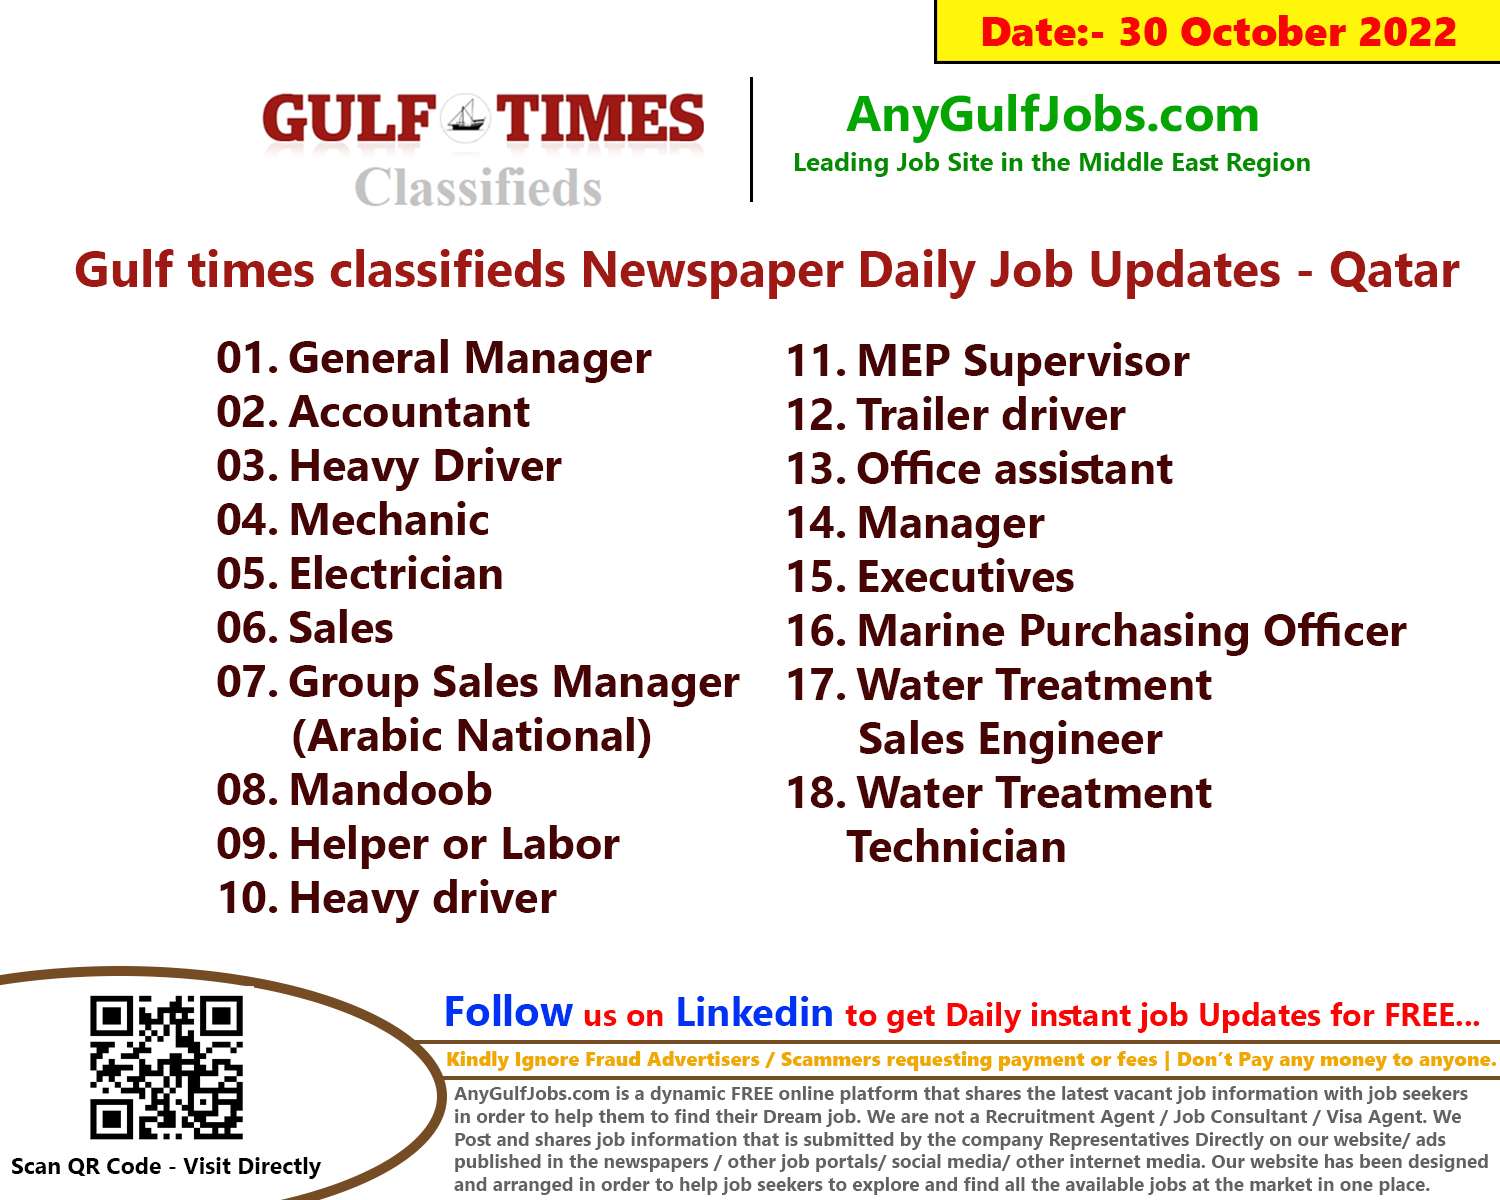 Gulf times classifieds Job Vacancies Qatar - 30 October 2022